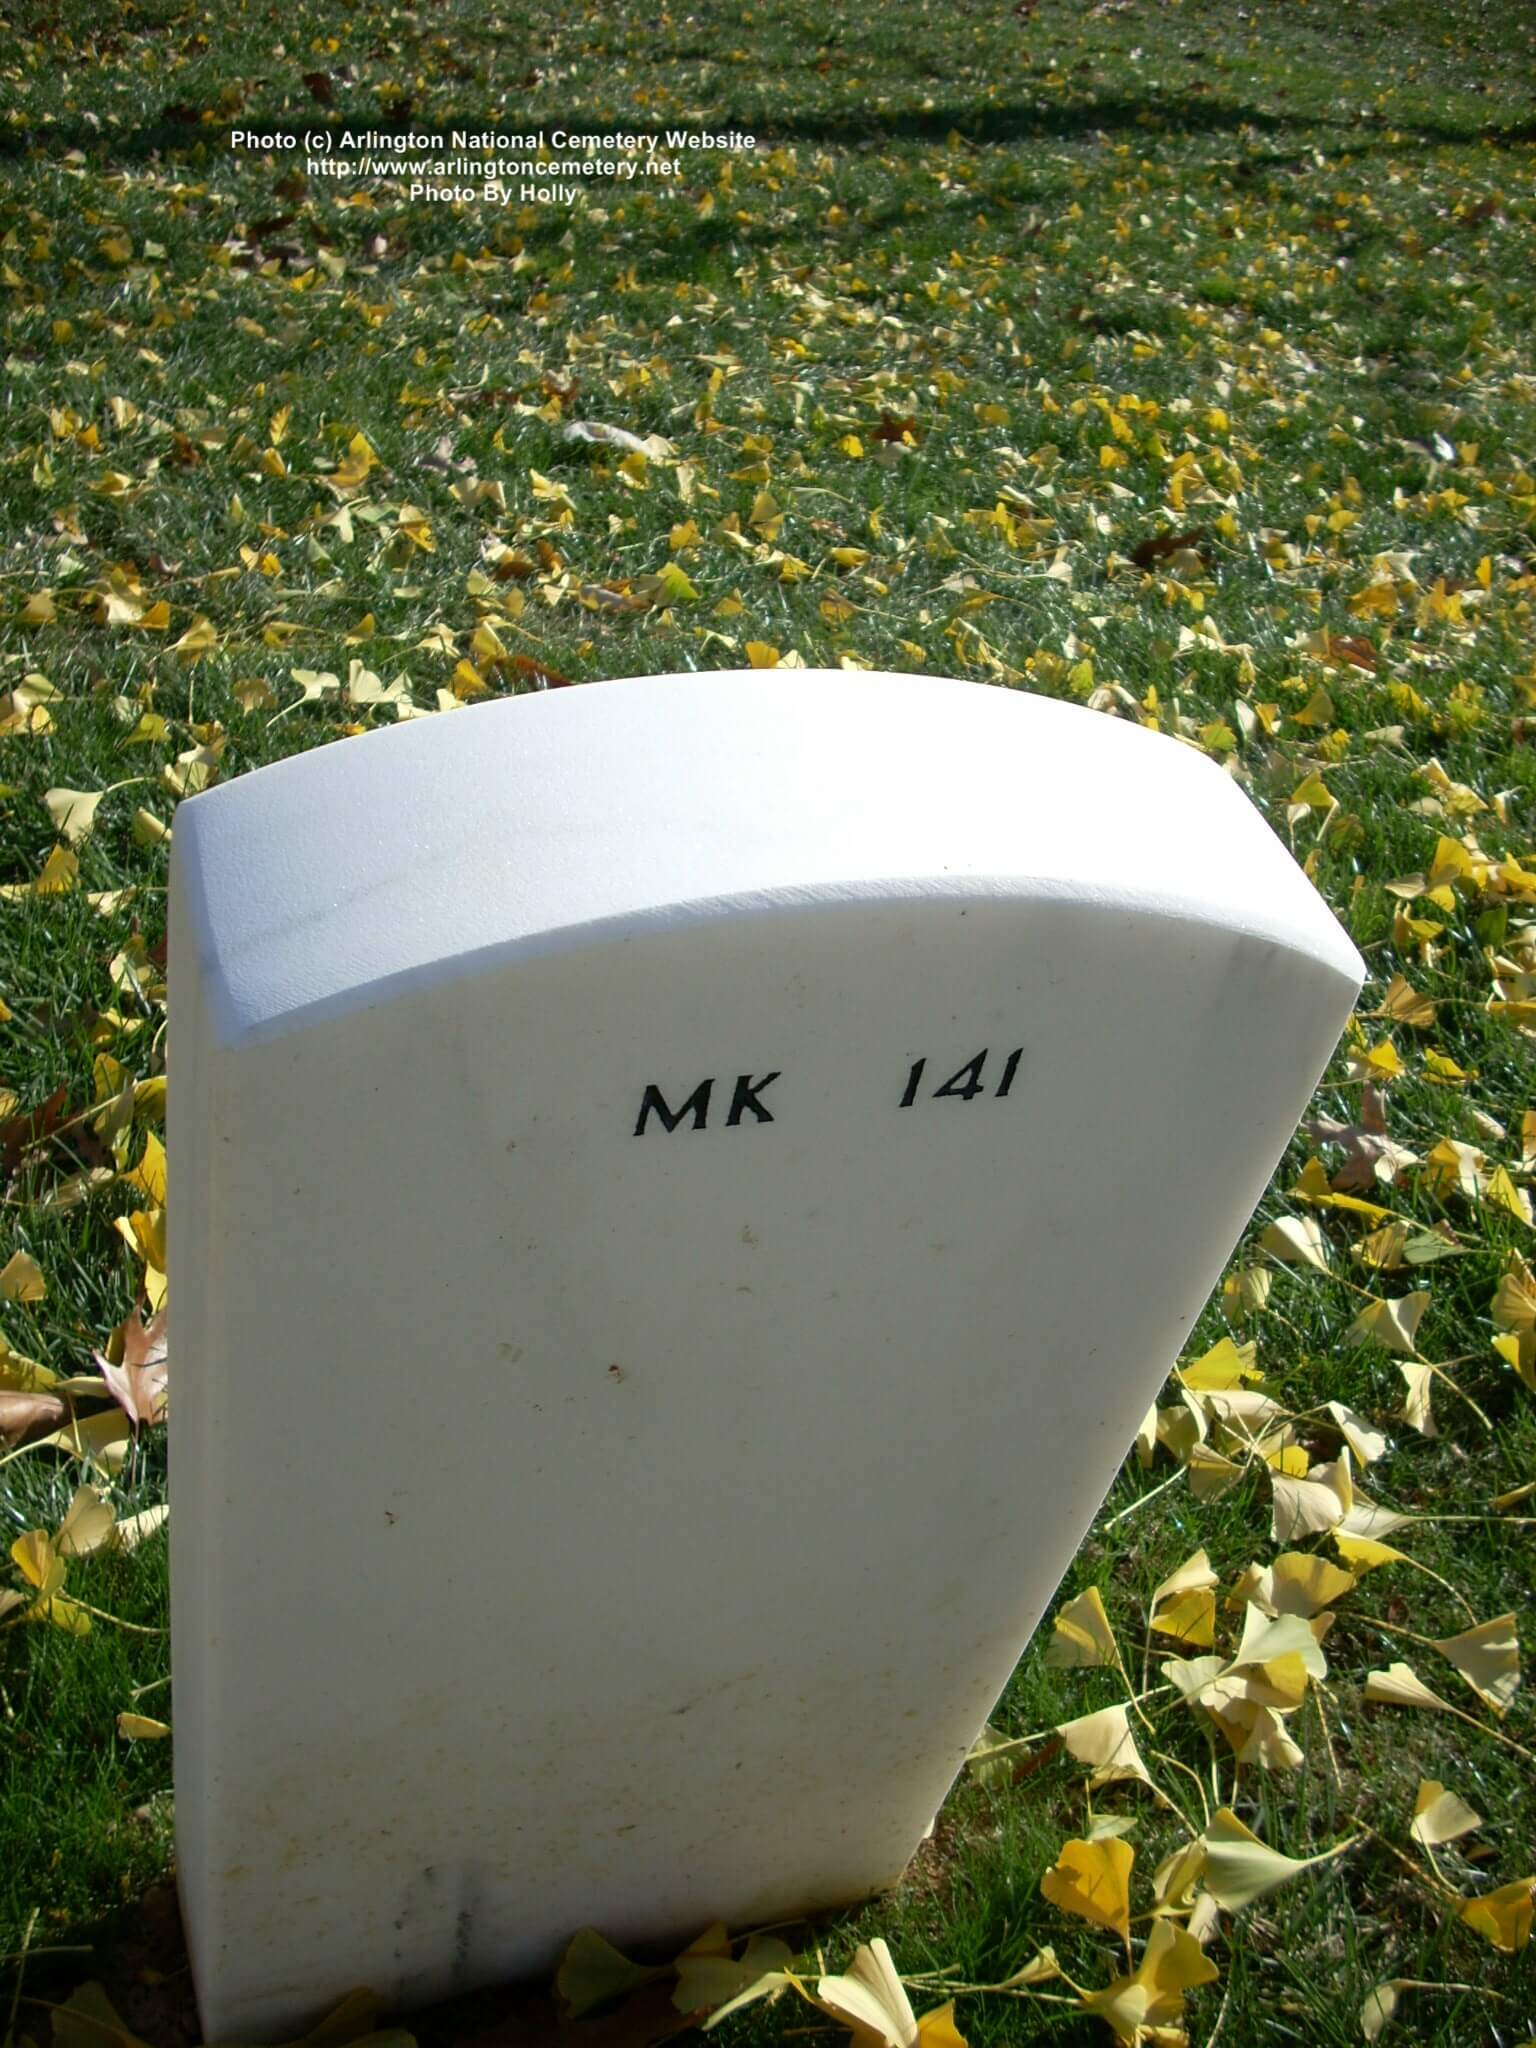 cmskero-gravesite-photo-november-2008-004